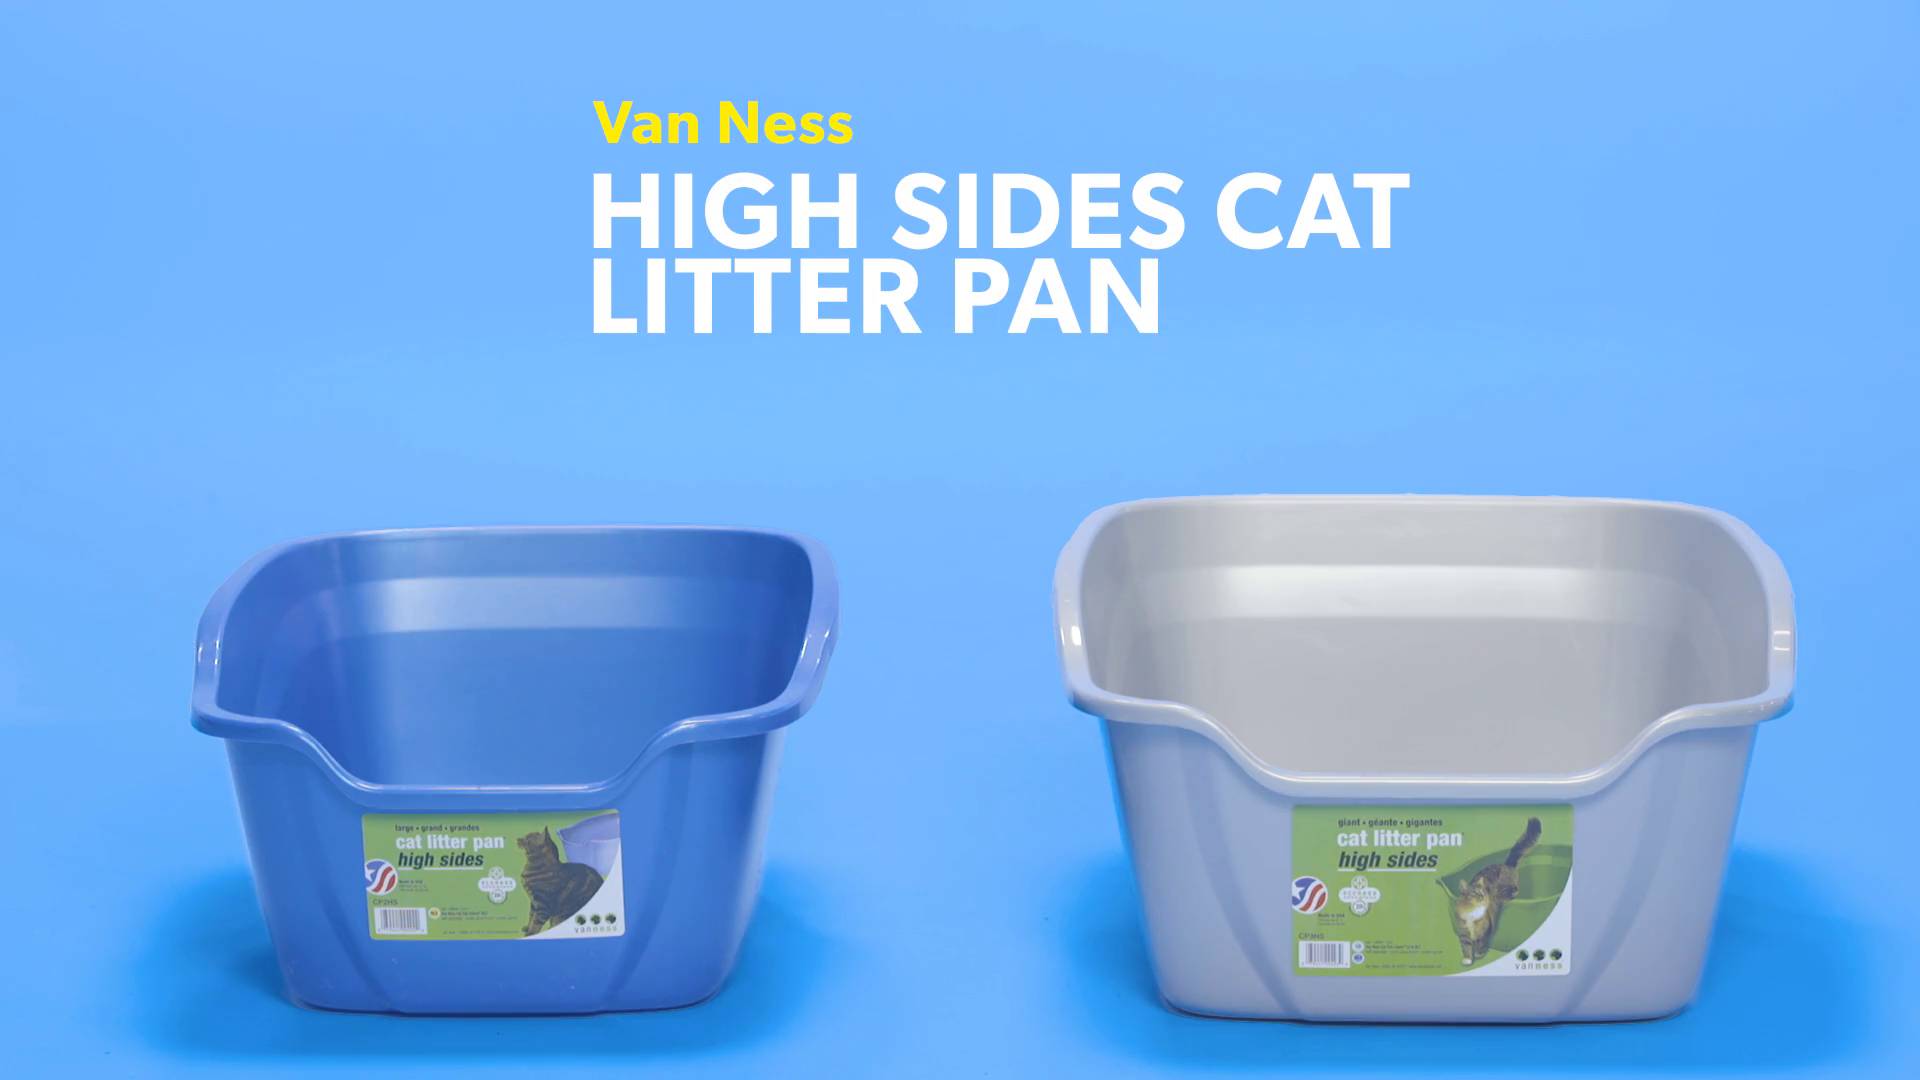 Van Ness High Sided Cat Litter Pan size Giant Colors ship in Random Order 